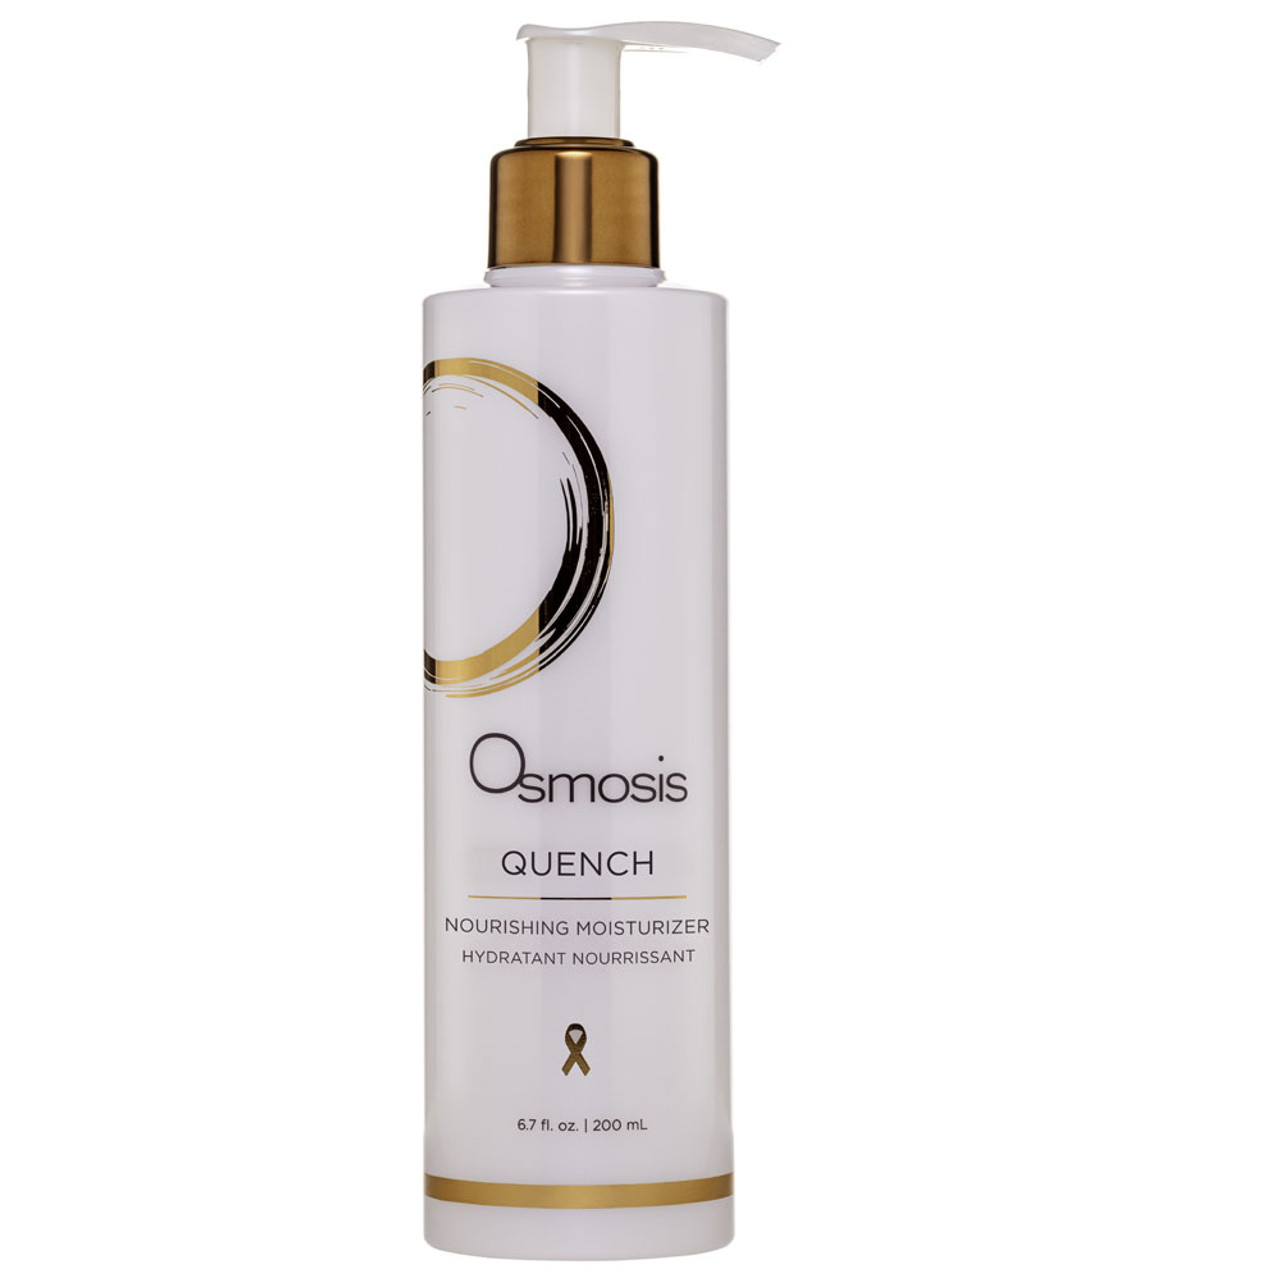 Osmosis +Skincare Quench - Nourishing Moisturizer BeautifiedYou.com